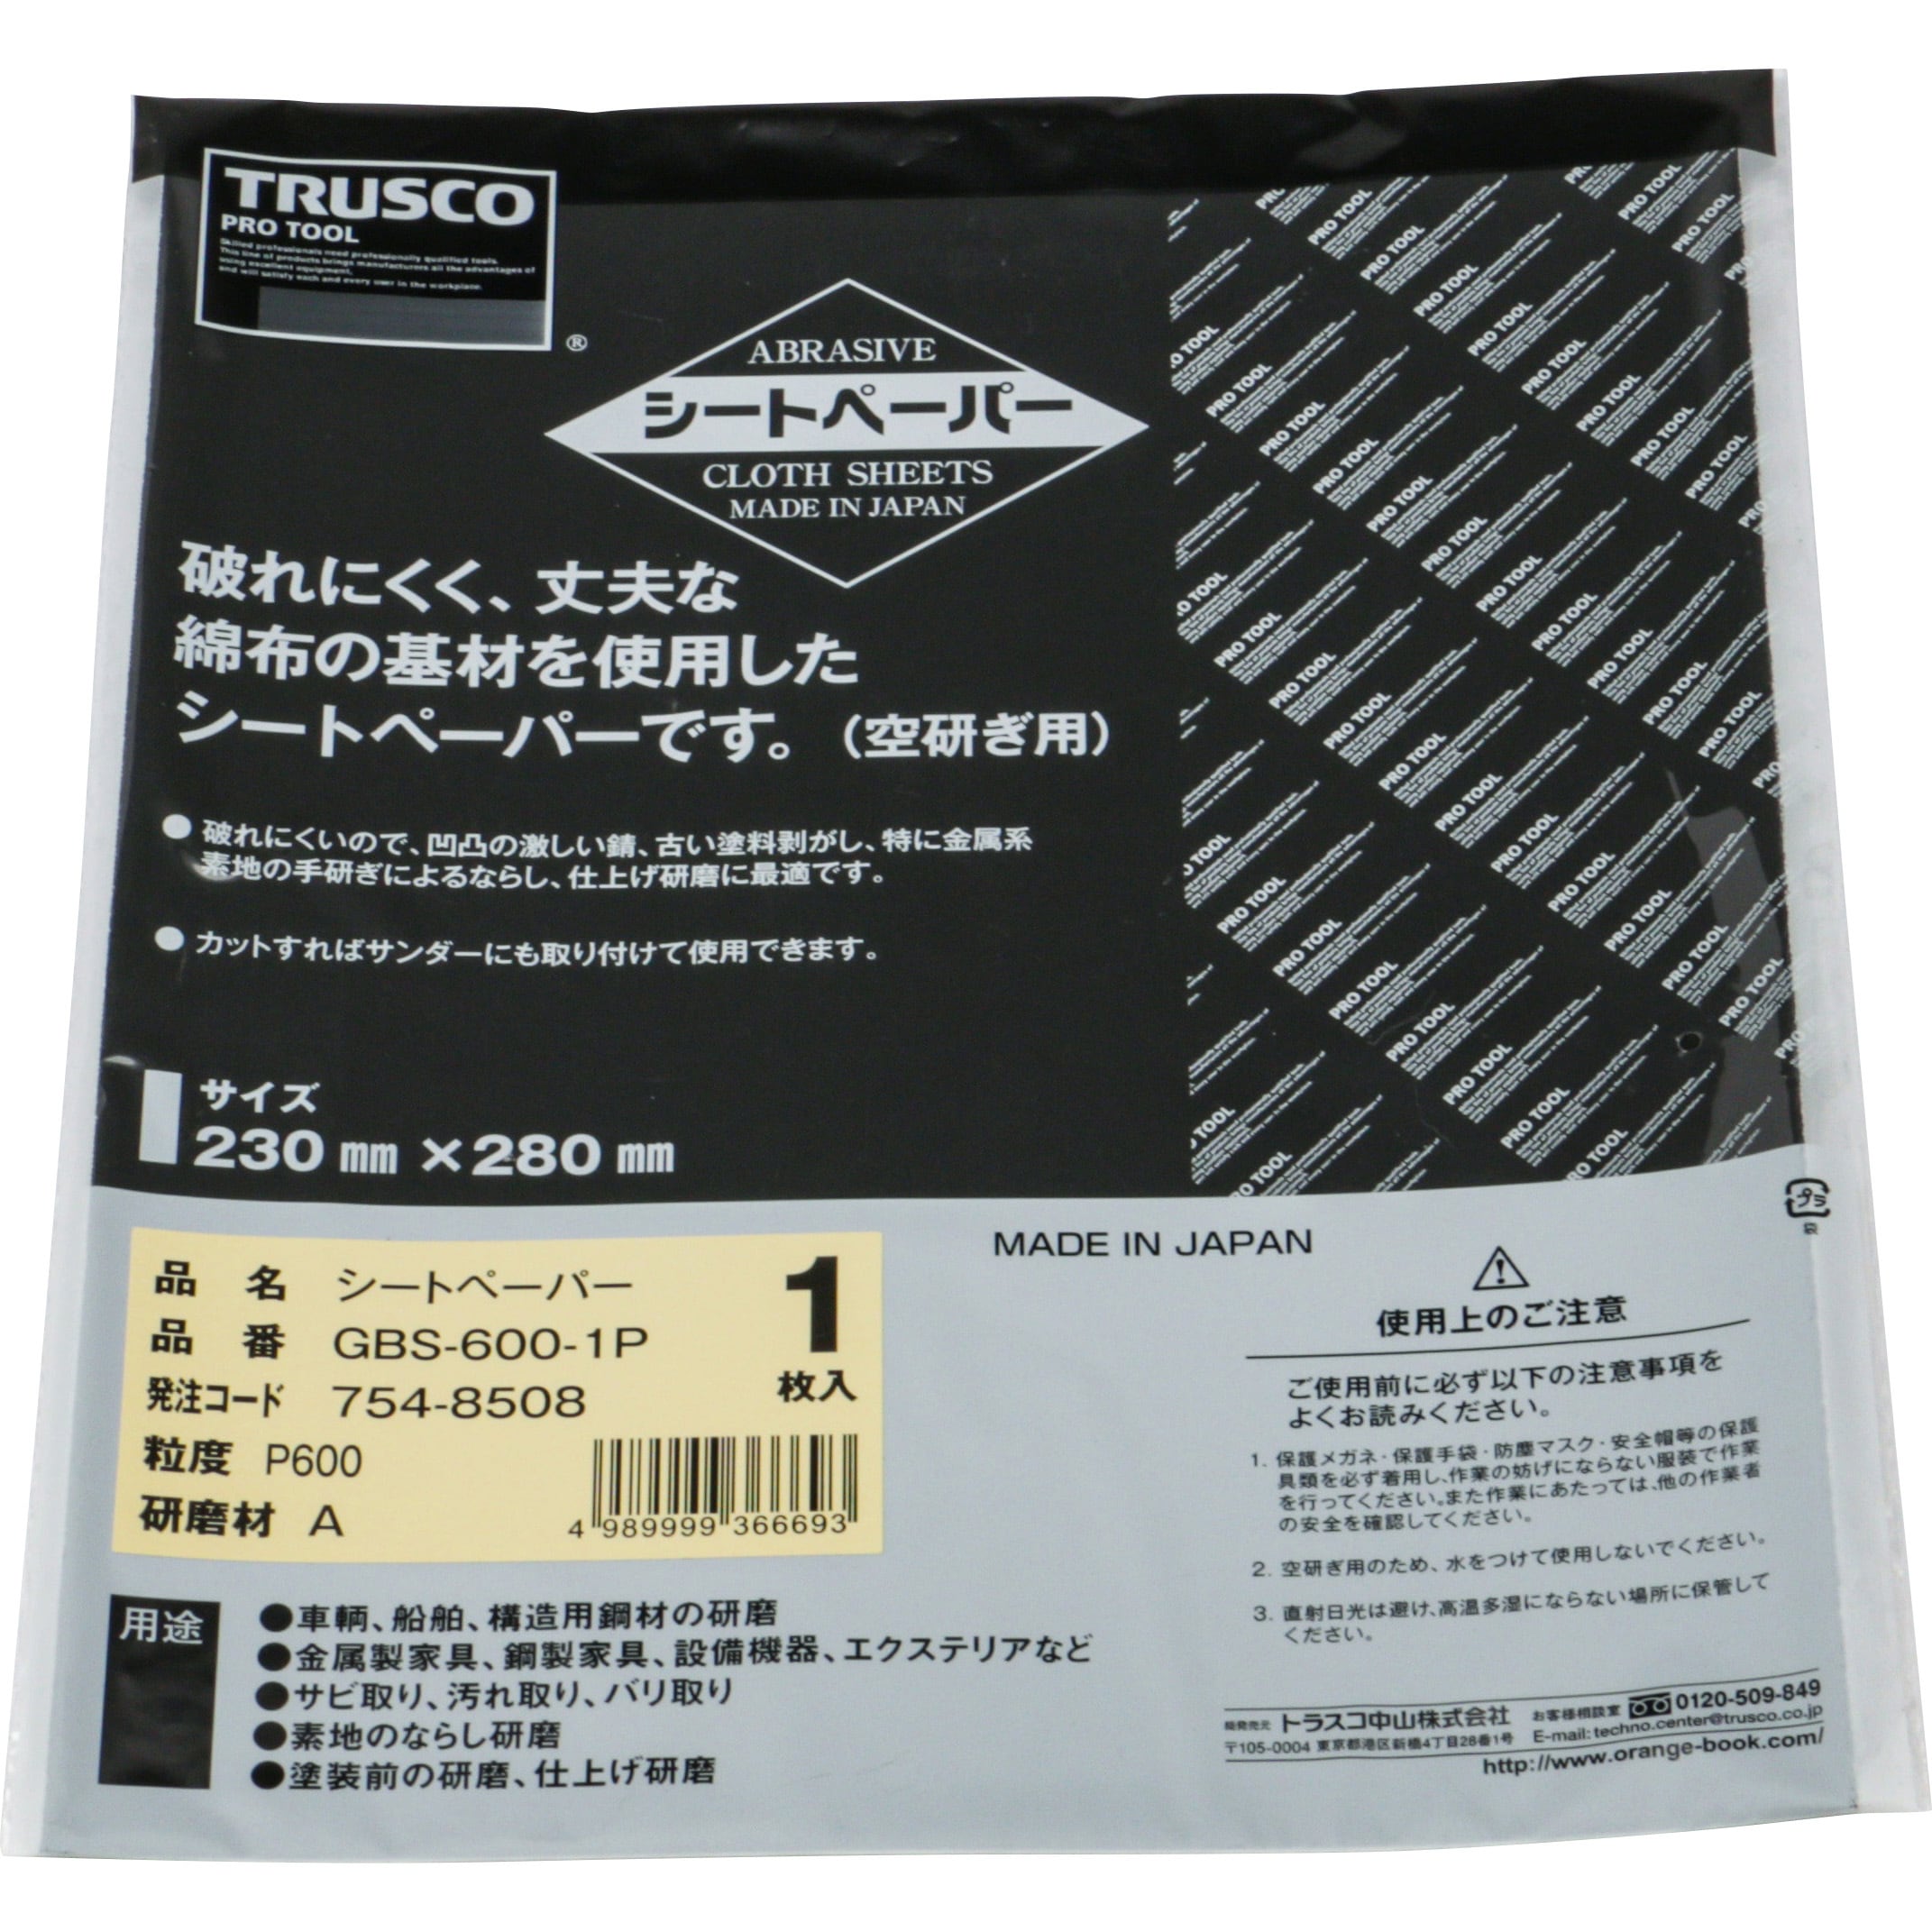 TRUSCO(トラスコ)和みシート5.4m×7.2mターコイズブルーTNGMー5472Bカラーシート 価格比較